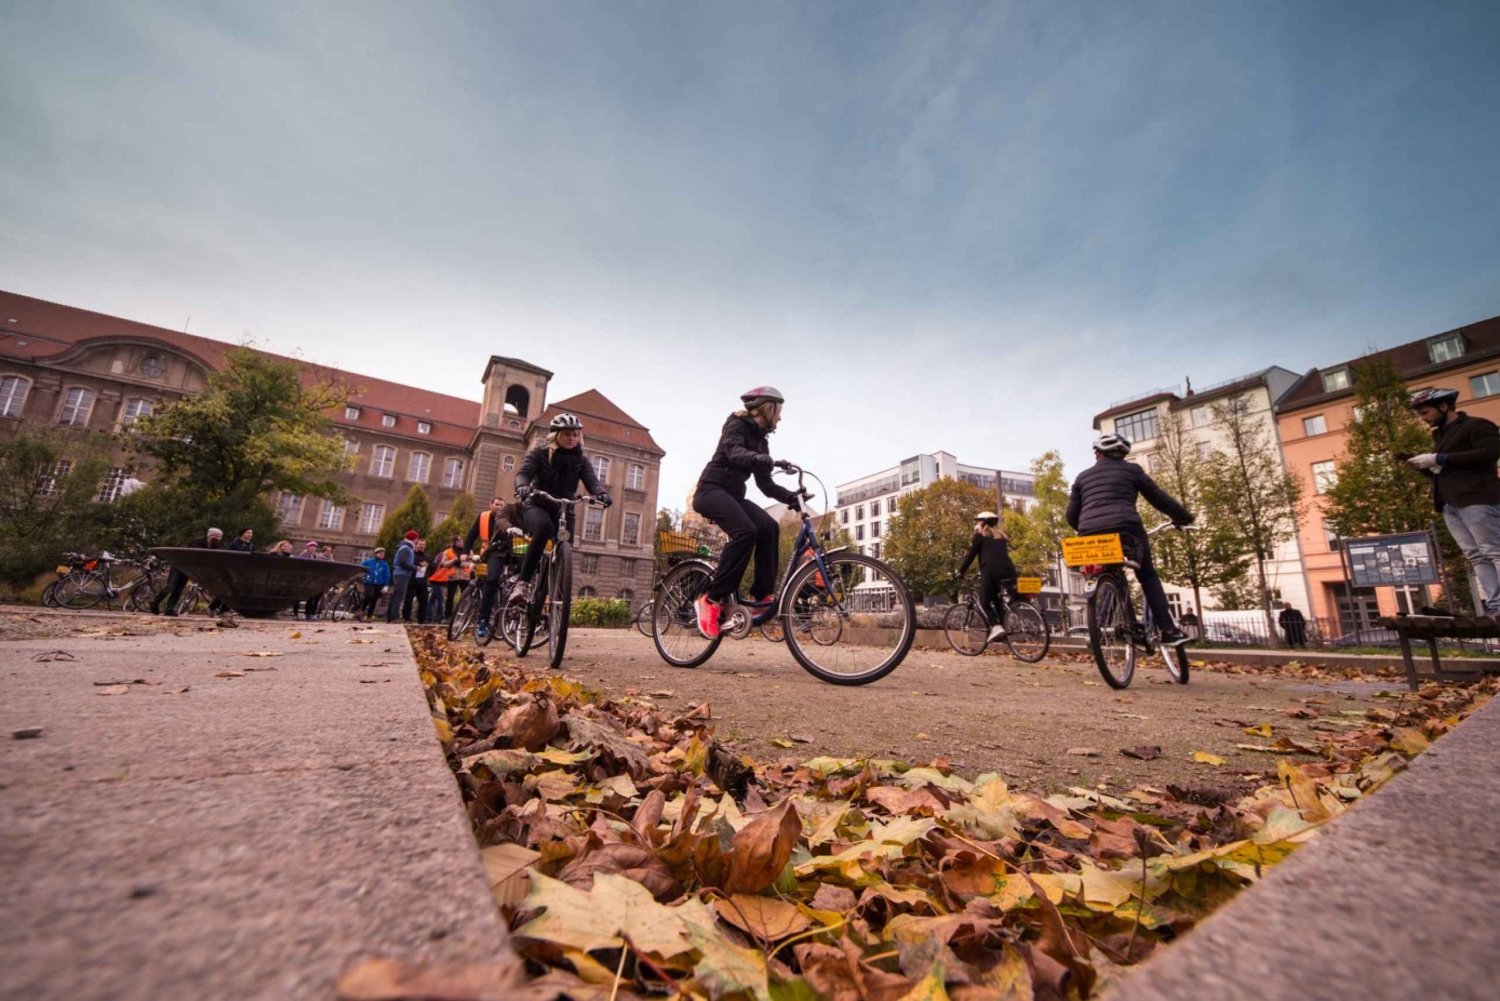 Berlin: 48- oder 72-stündiger Fahrradverleih